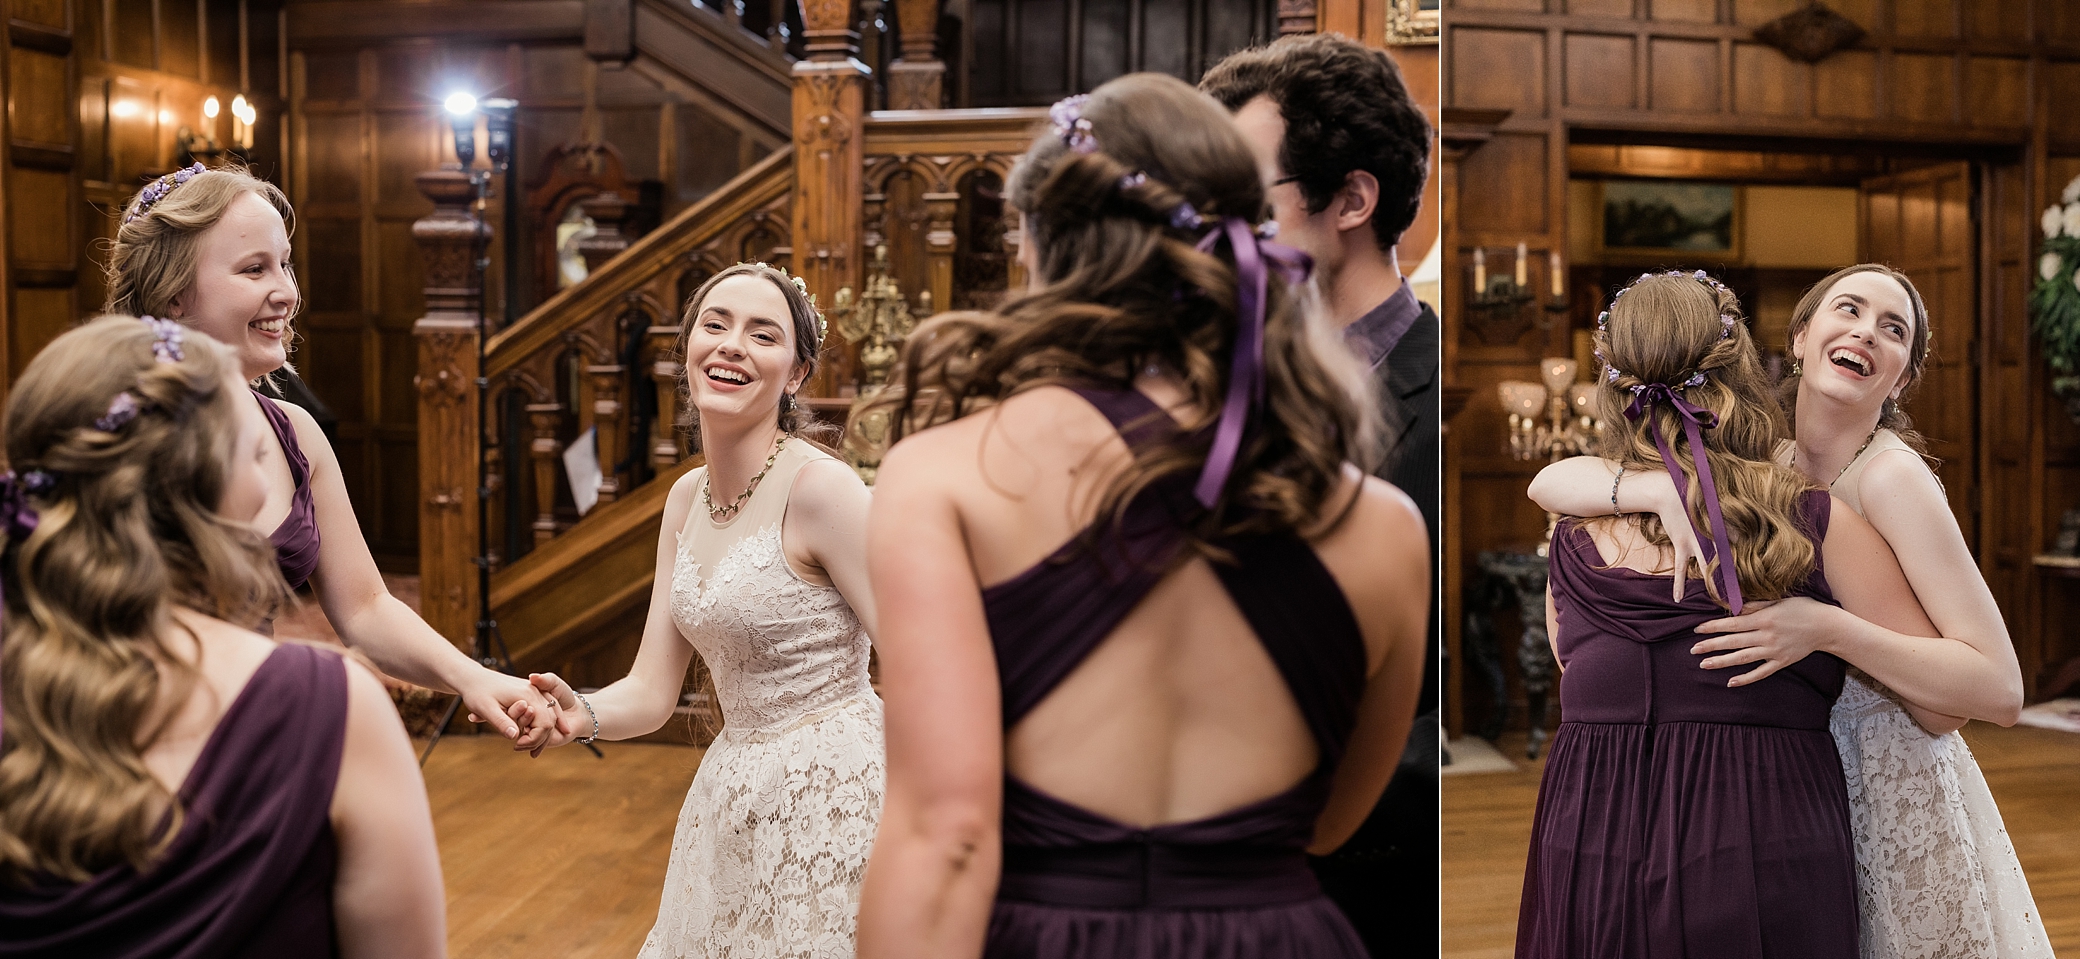 Reception dancing at Tacoma Wedding Venue, Thornewood Castle | Megan Montalvo Photography